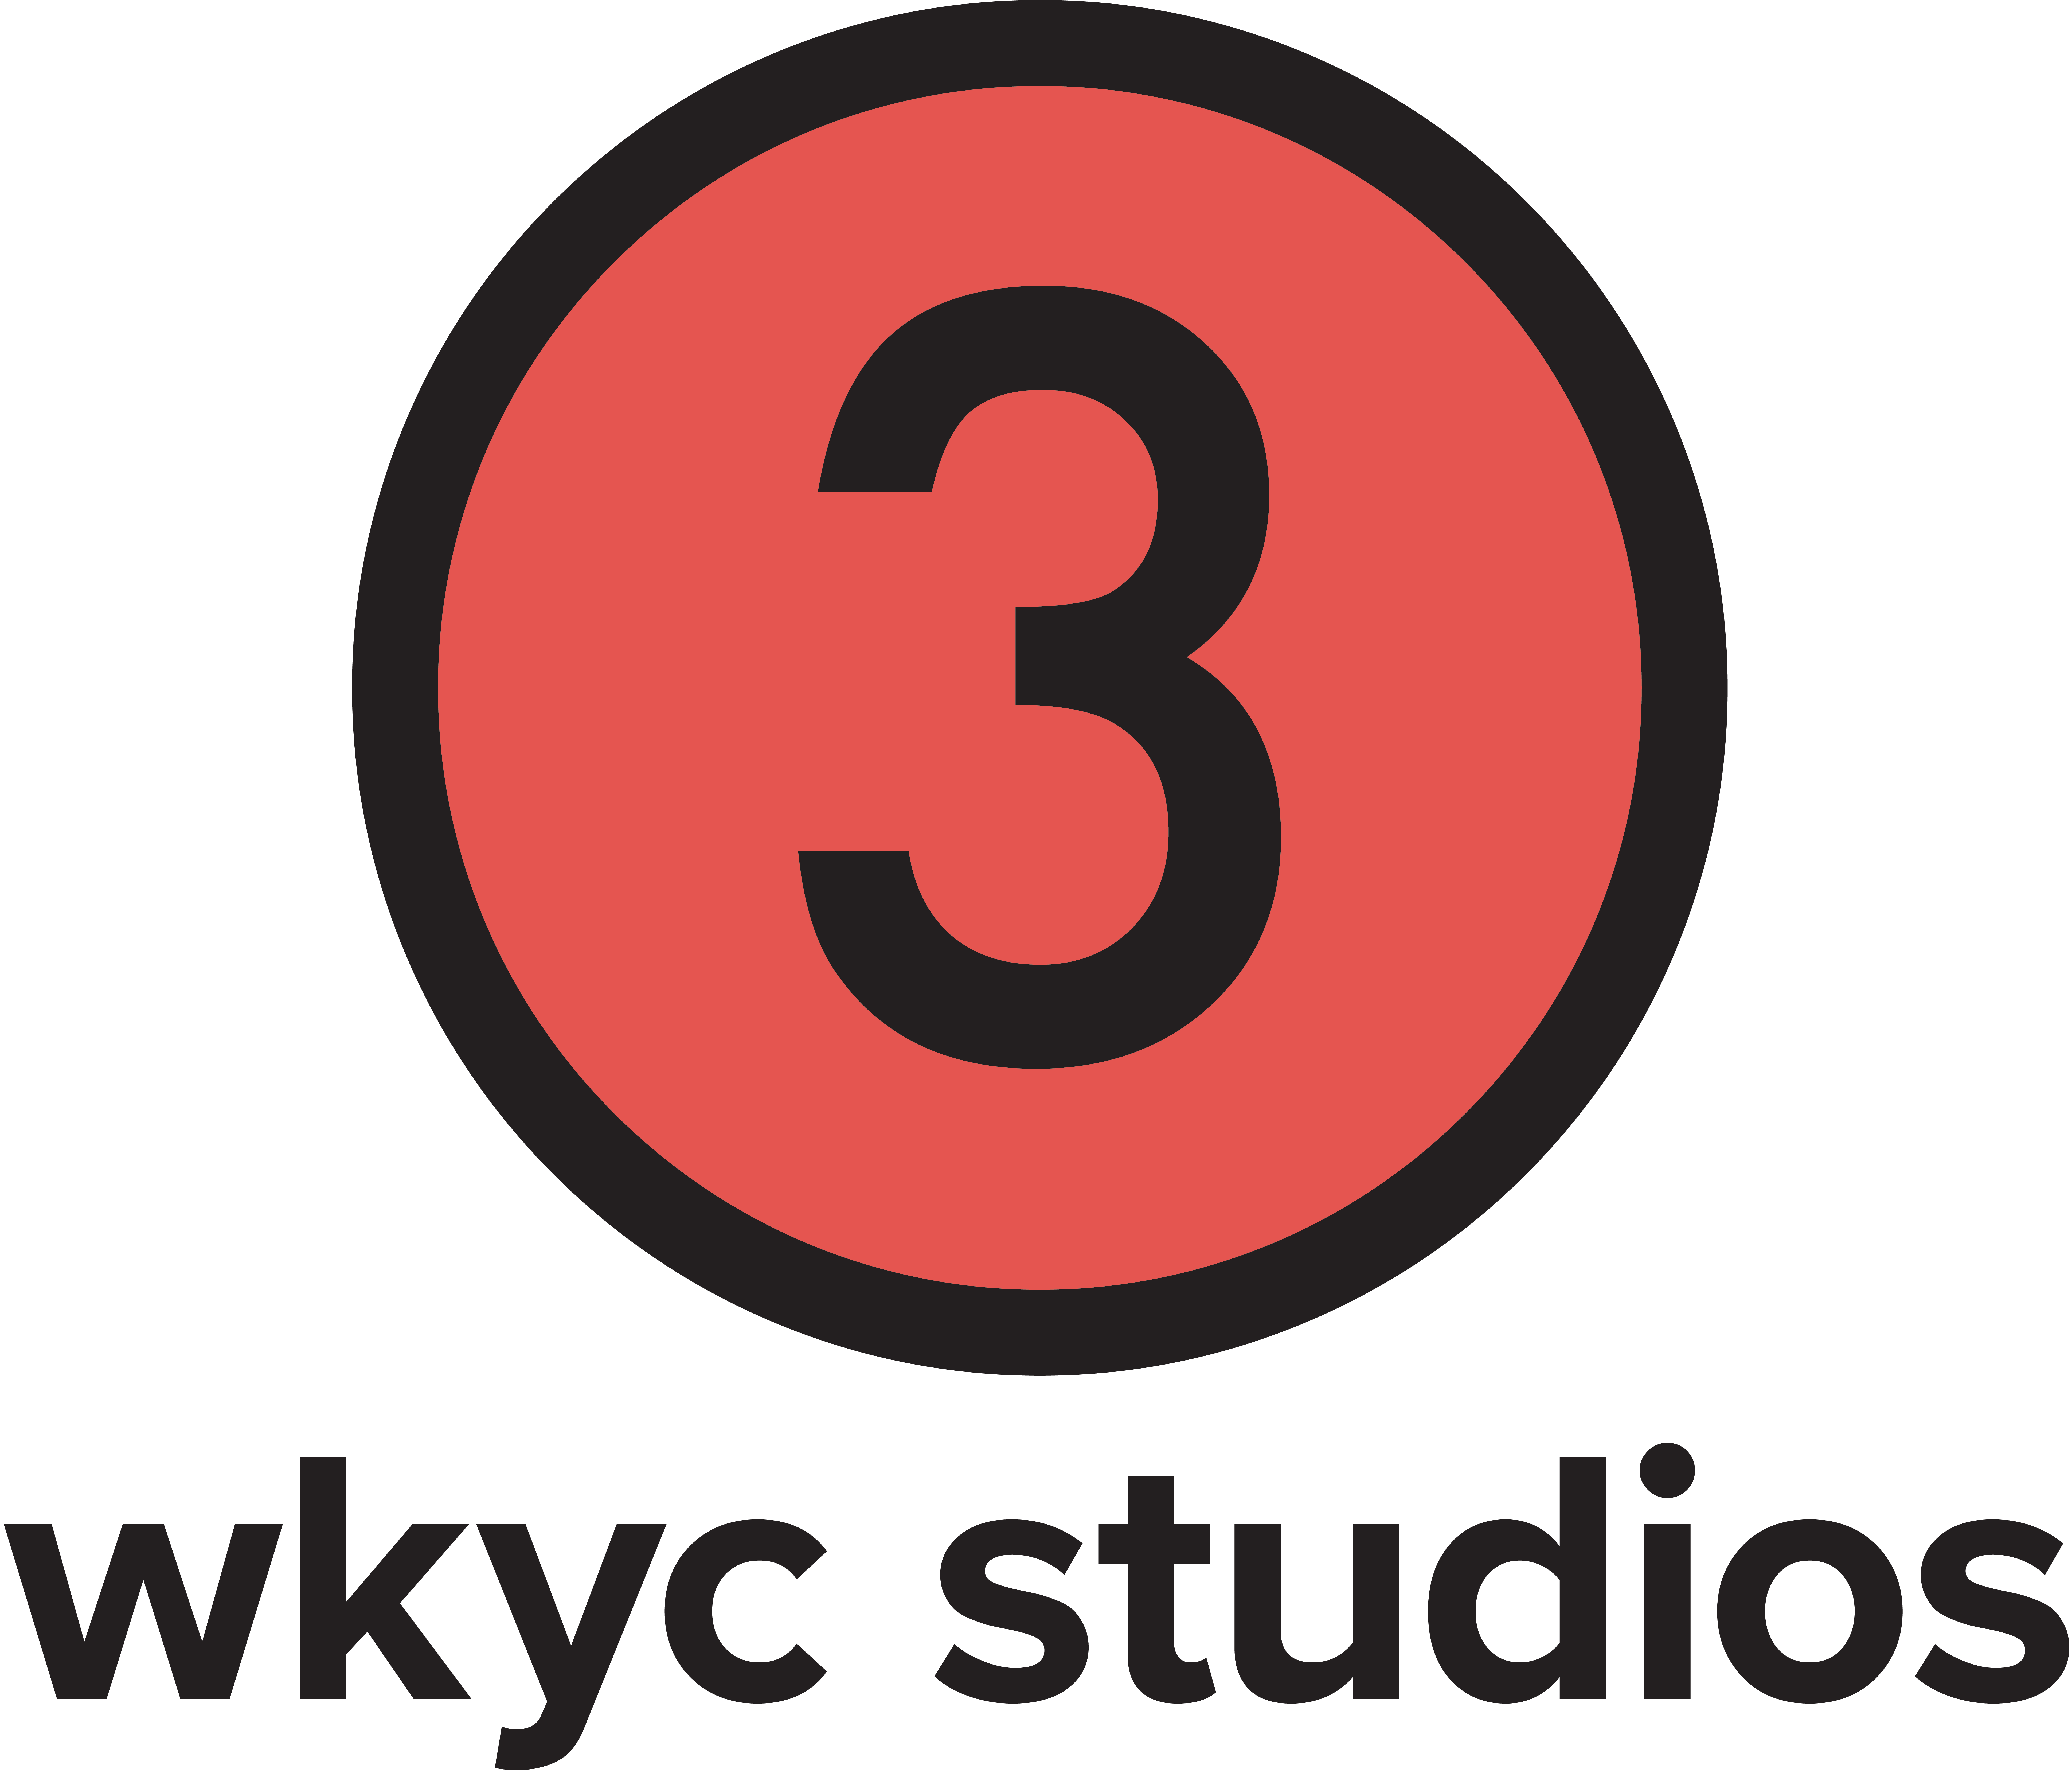 3 studios logo - Black-Red (2)